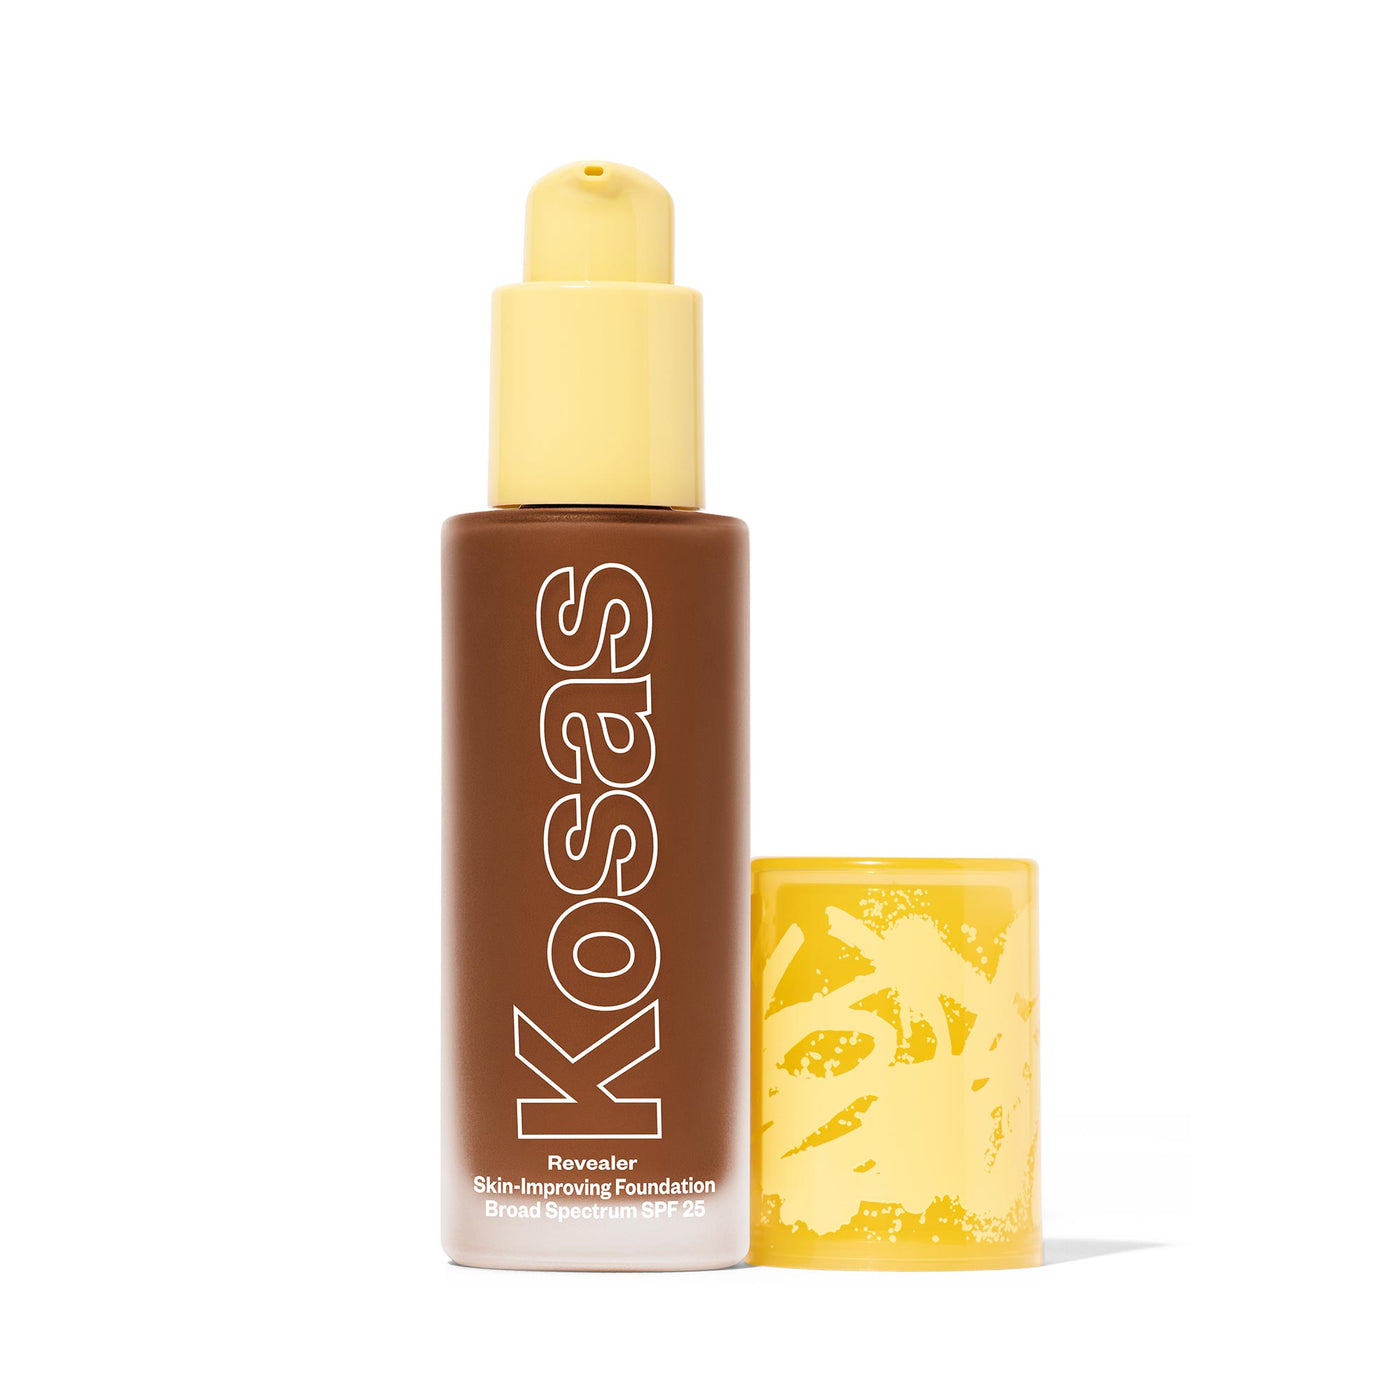 Kosas Revealer Skin Improving Foundation SPF25 - 410